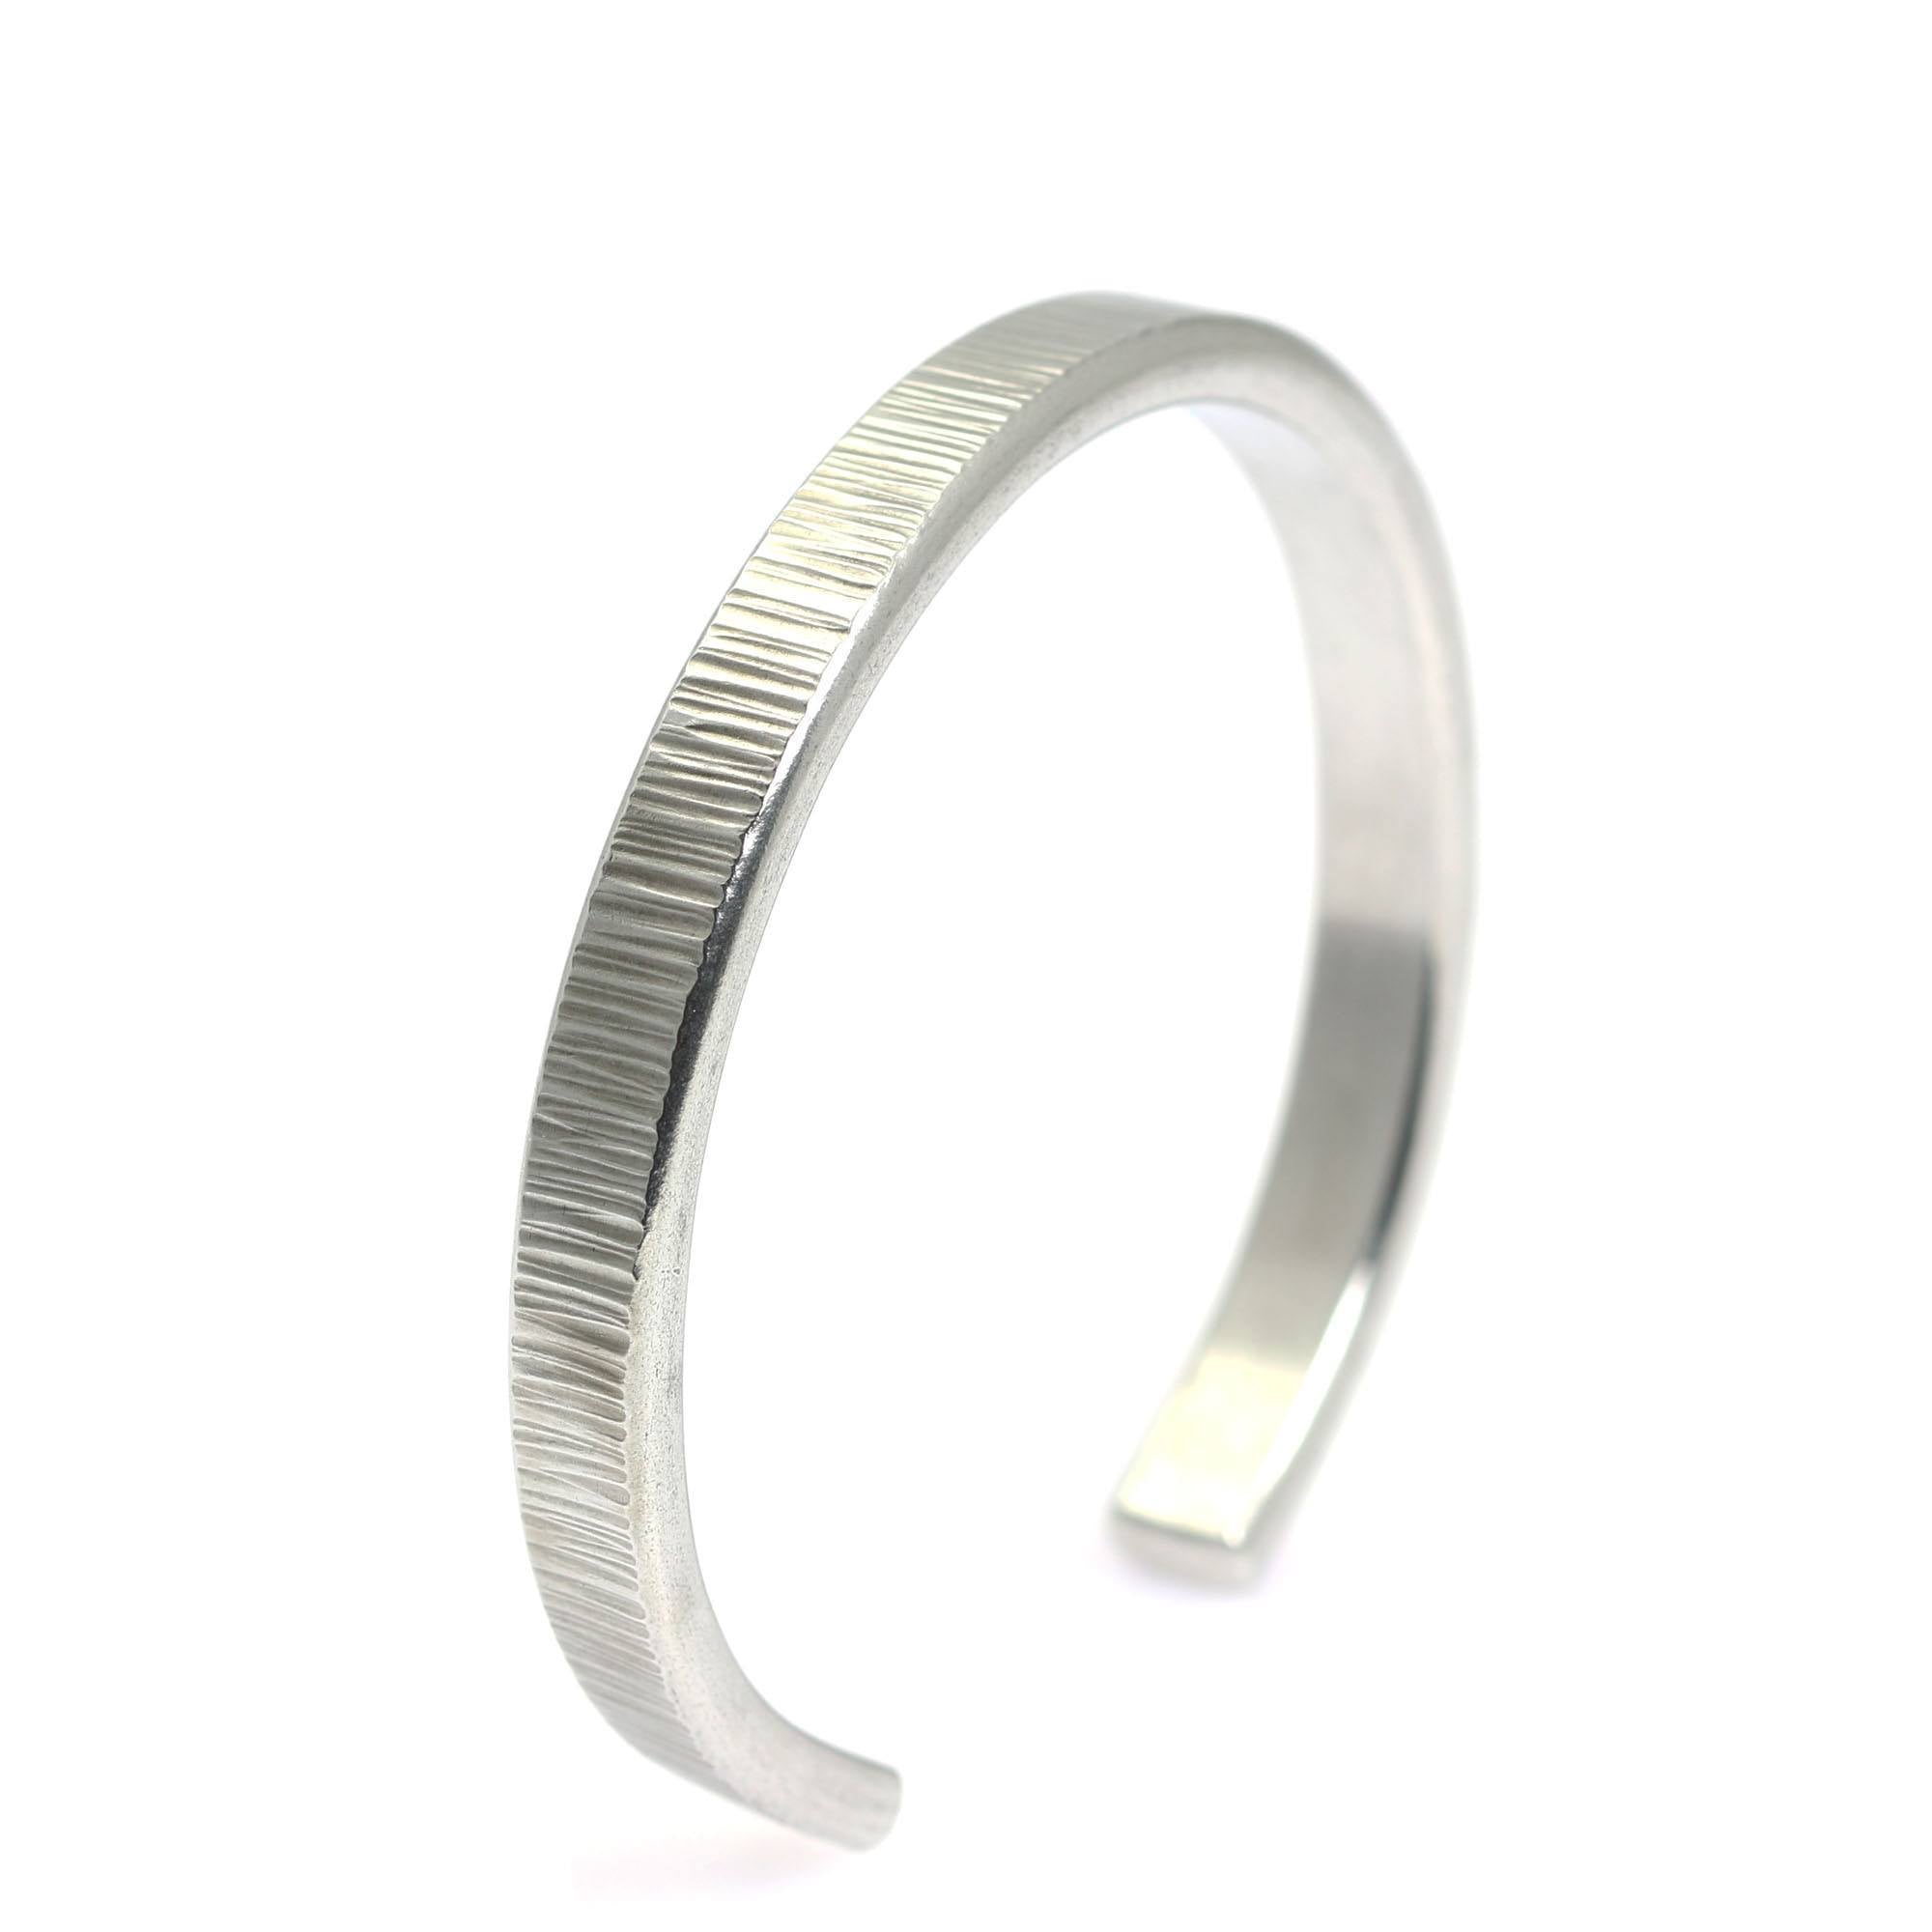 Thin Chased Aluminum Cuff Bracelet